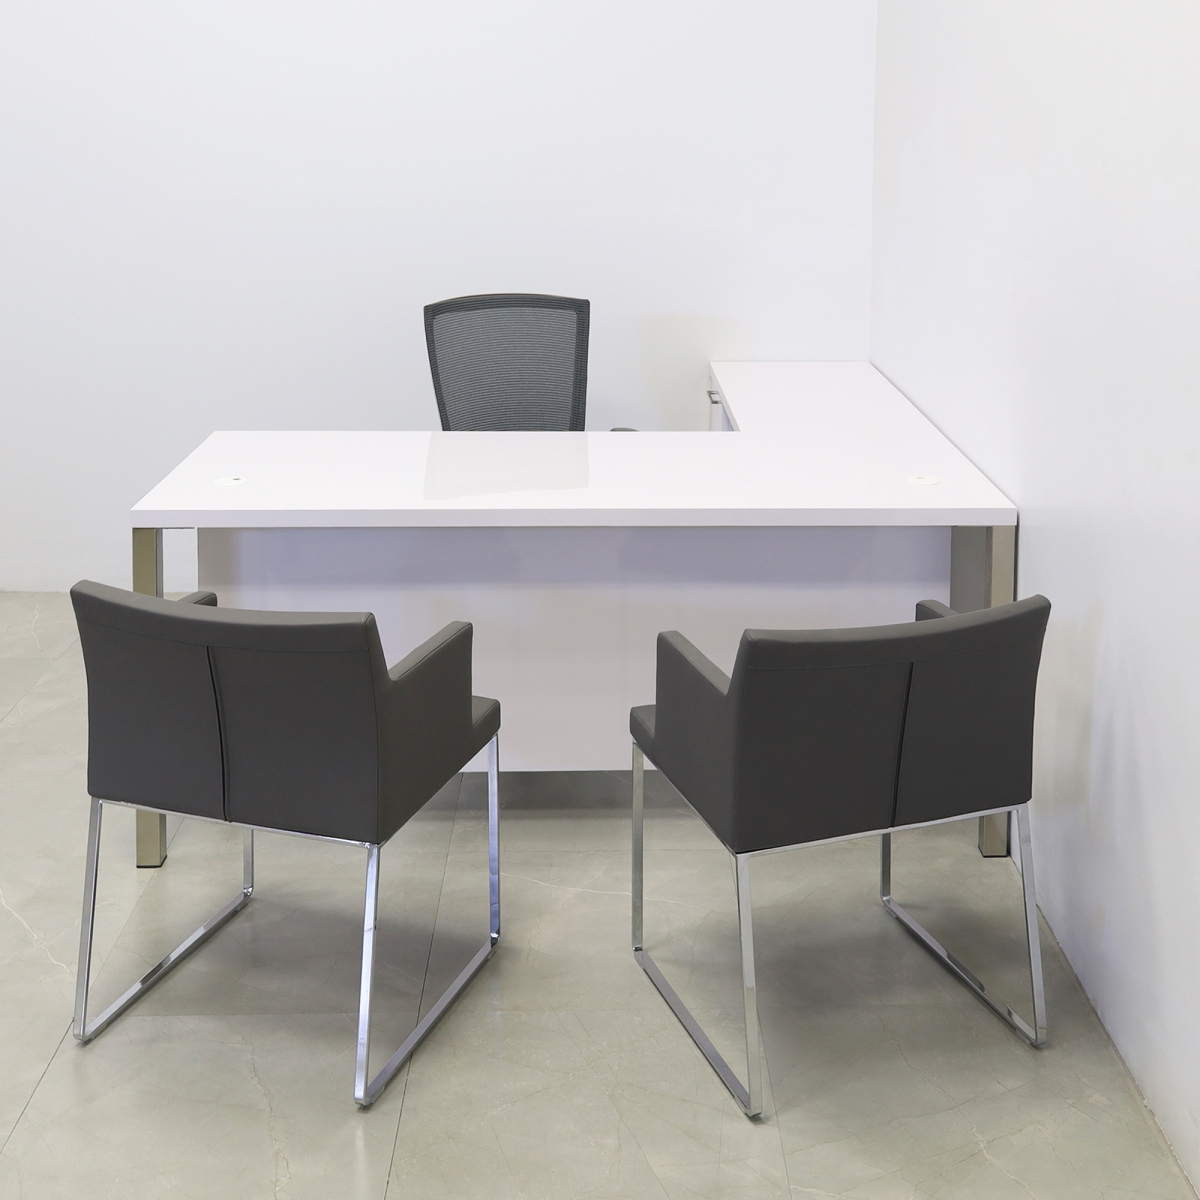 Dallas L-Shape Executive Desk With Cabinet and Laminate Top